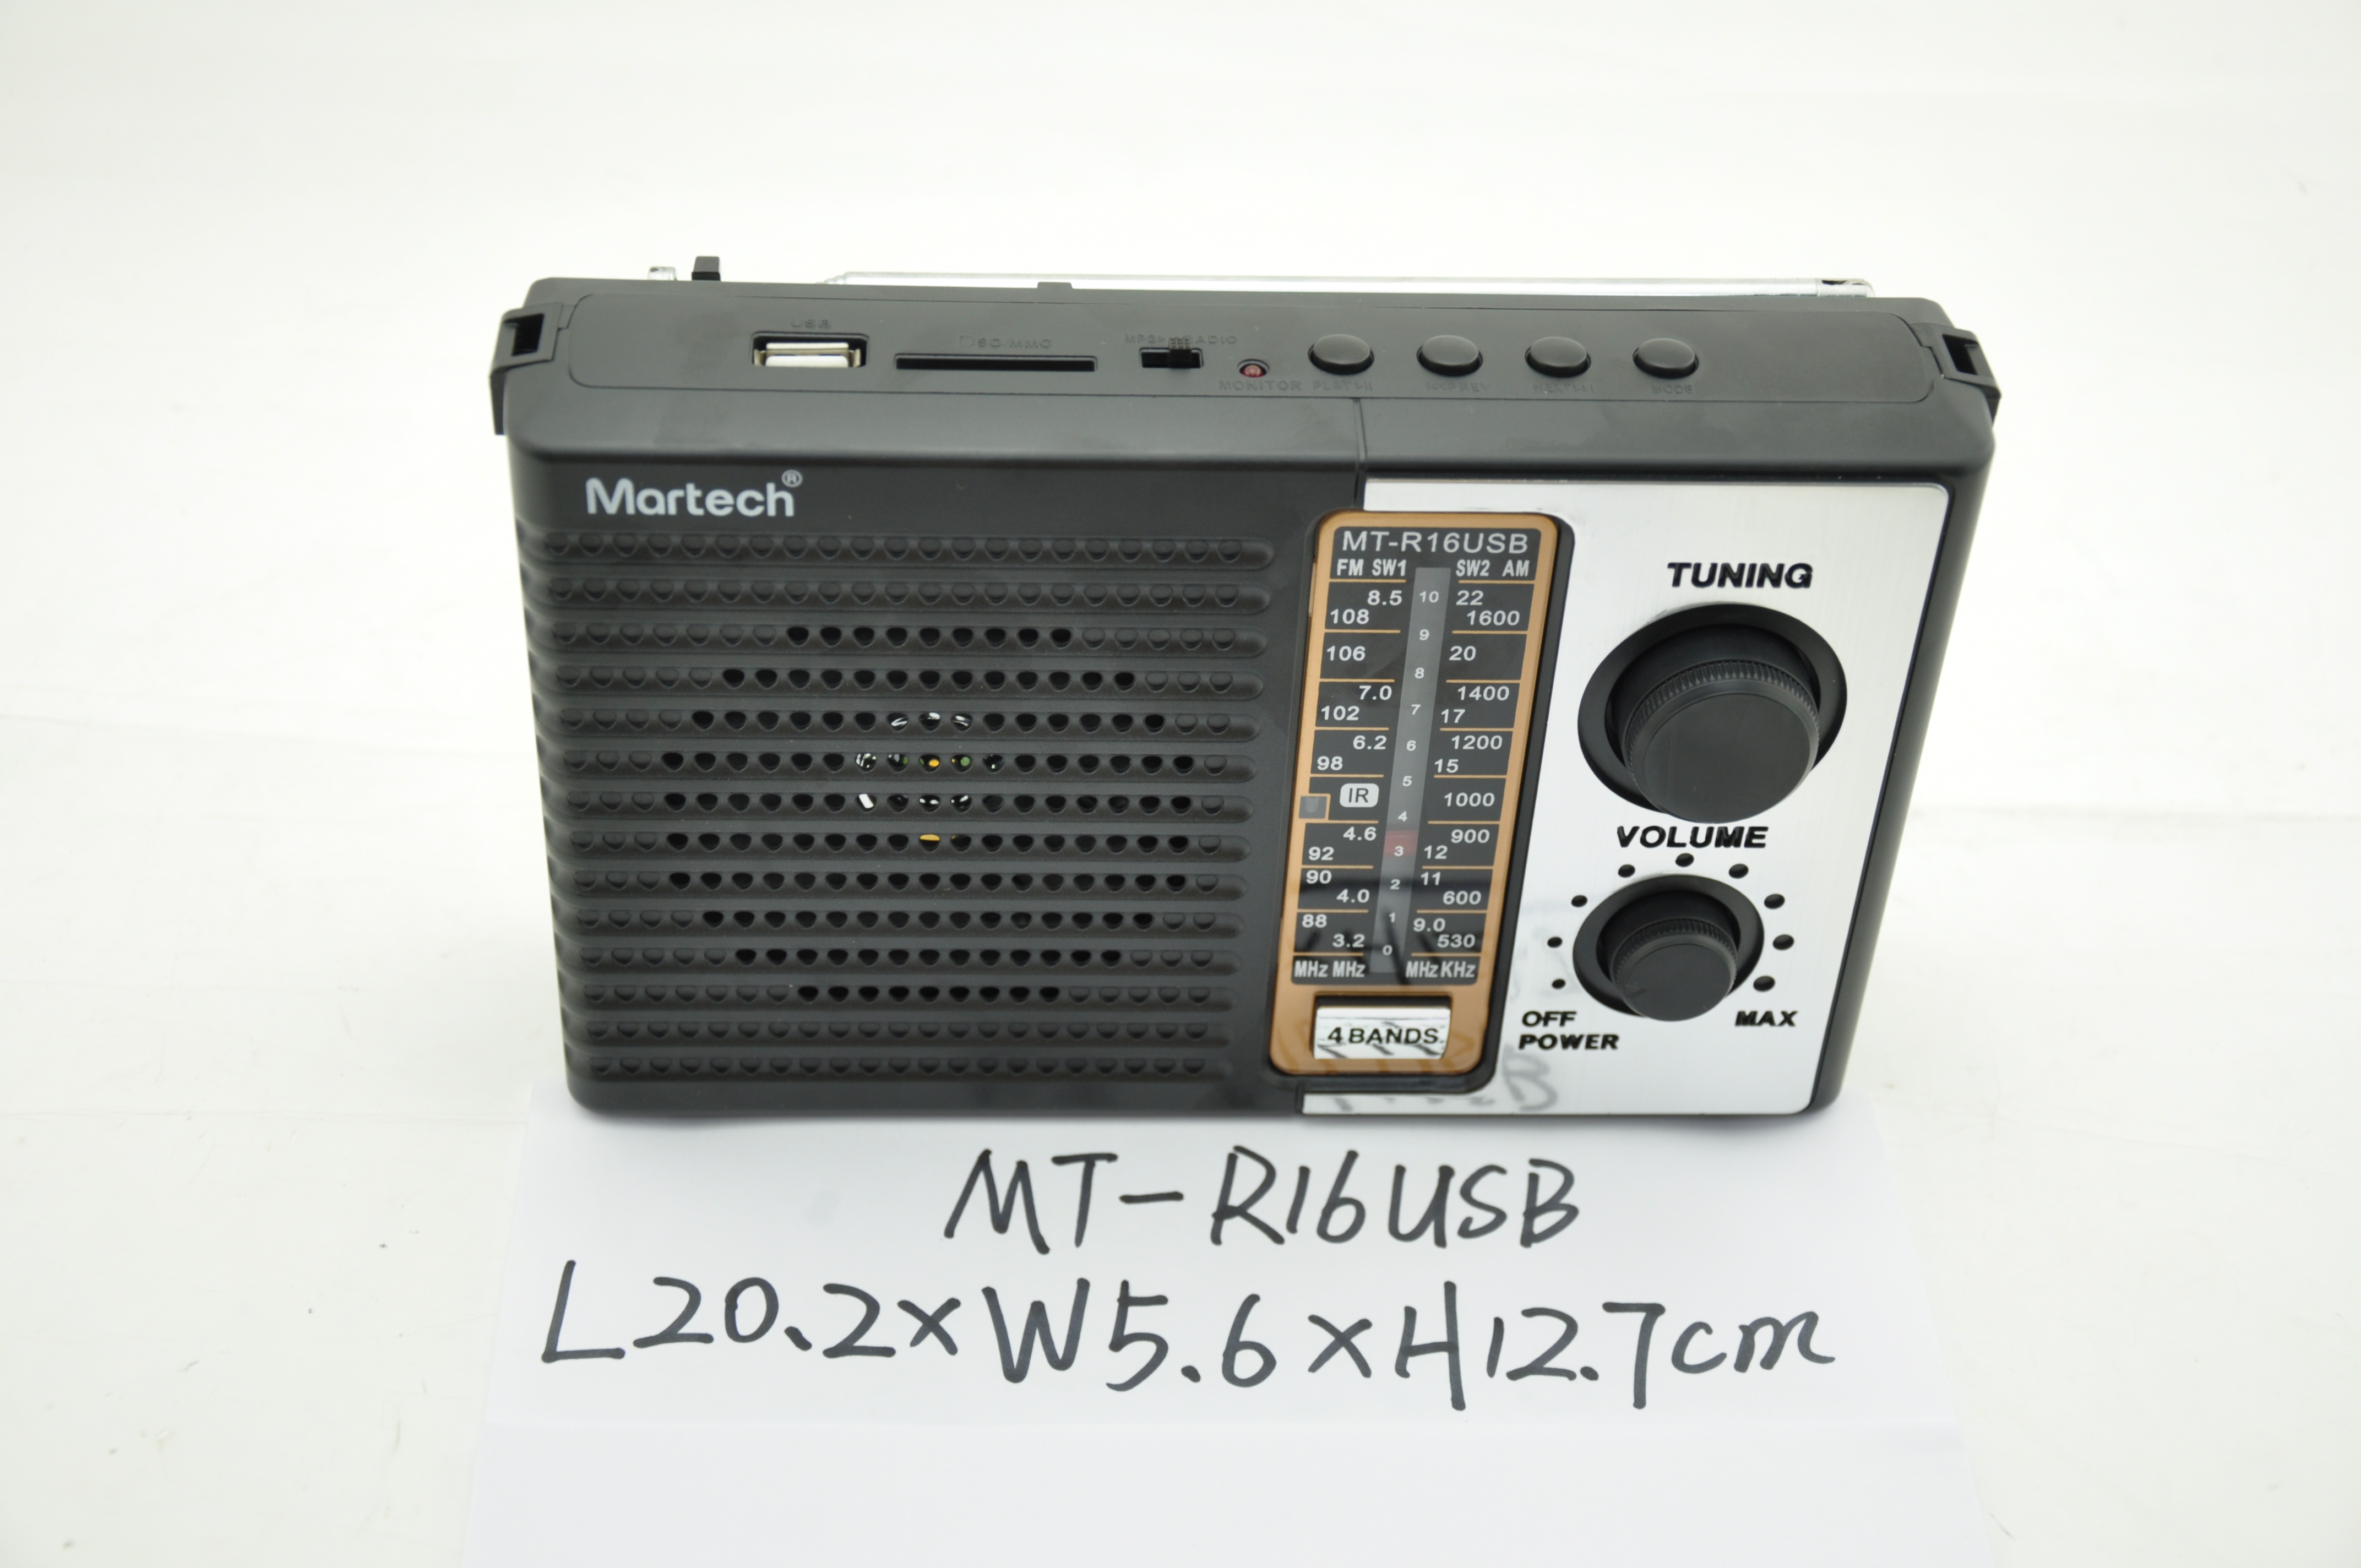 MT-R16USBradio with usb fm am sw radio